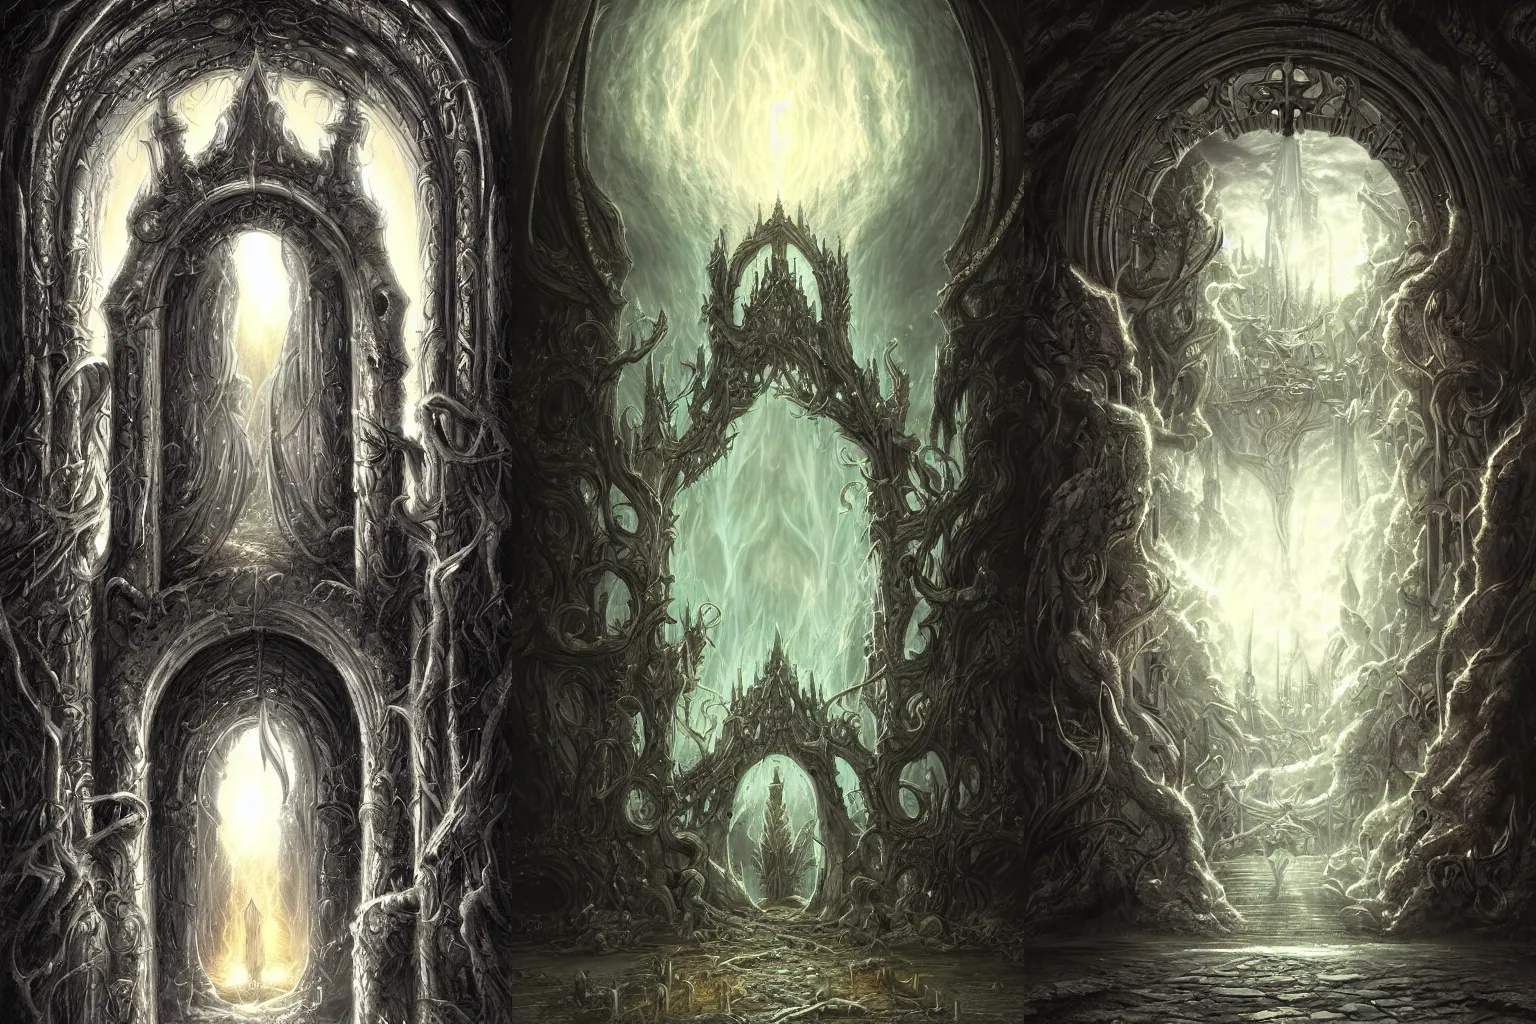 Prompt: the gate to the eternal kingdom of despair, fantasy, digital art, hd, detailed.